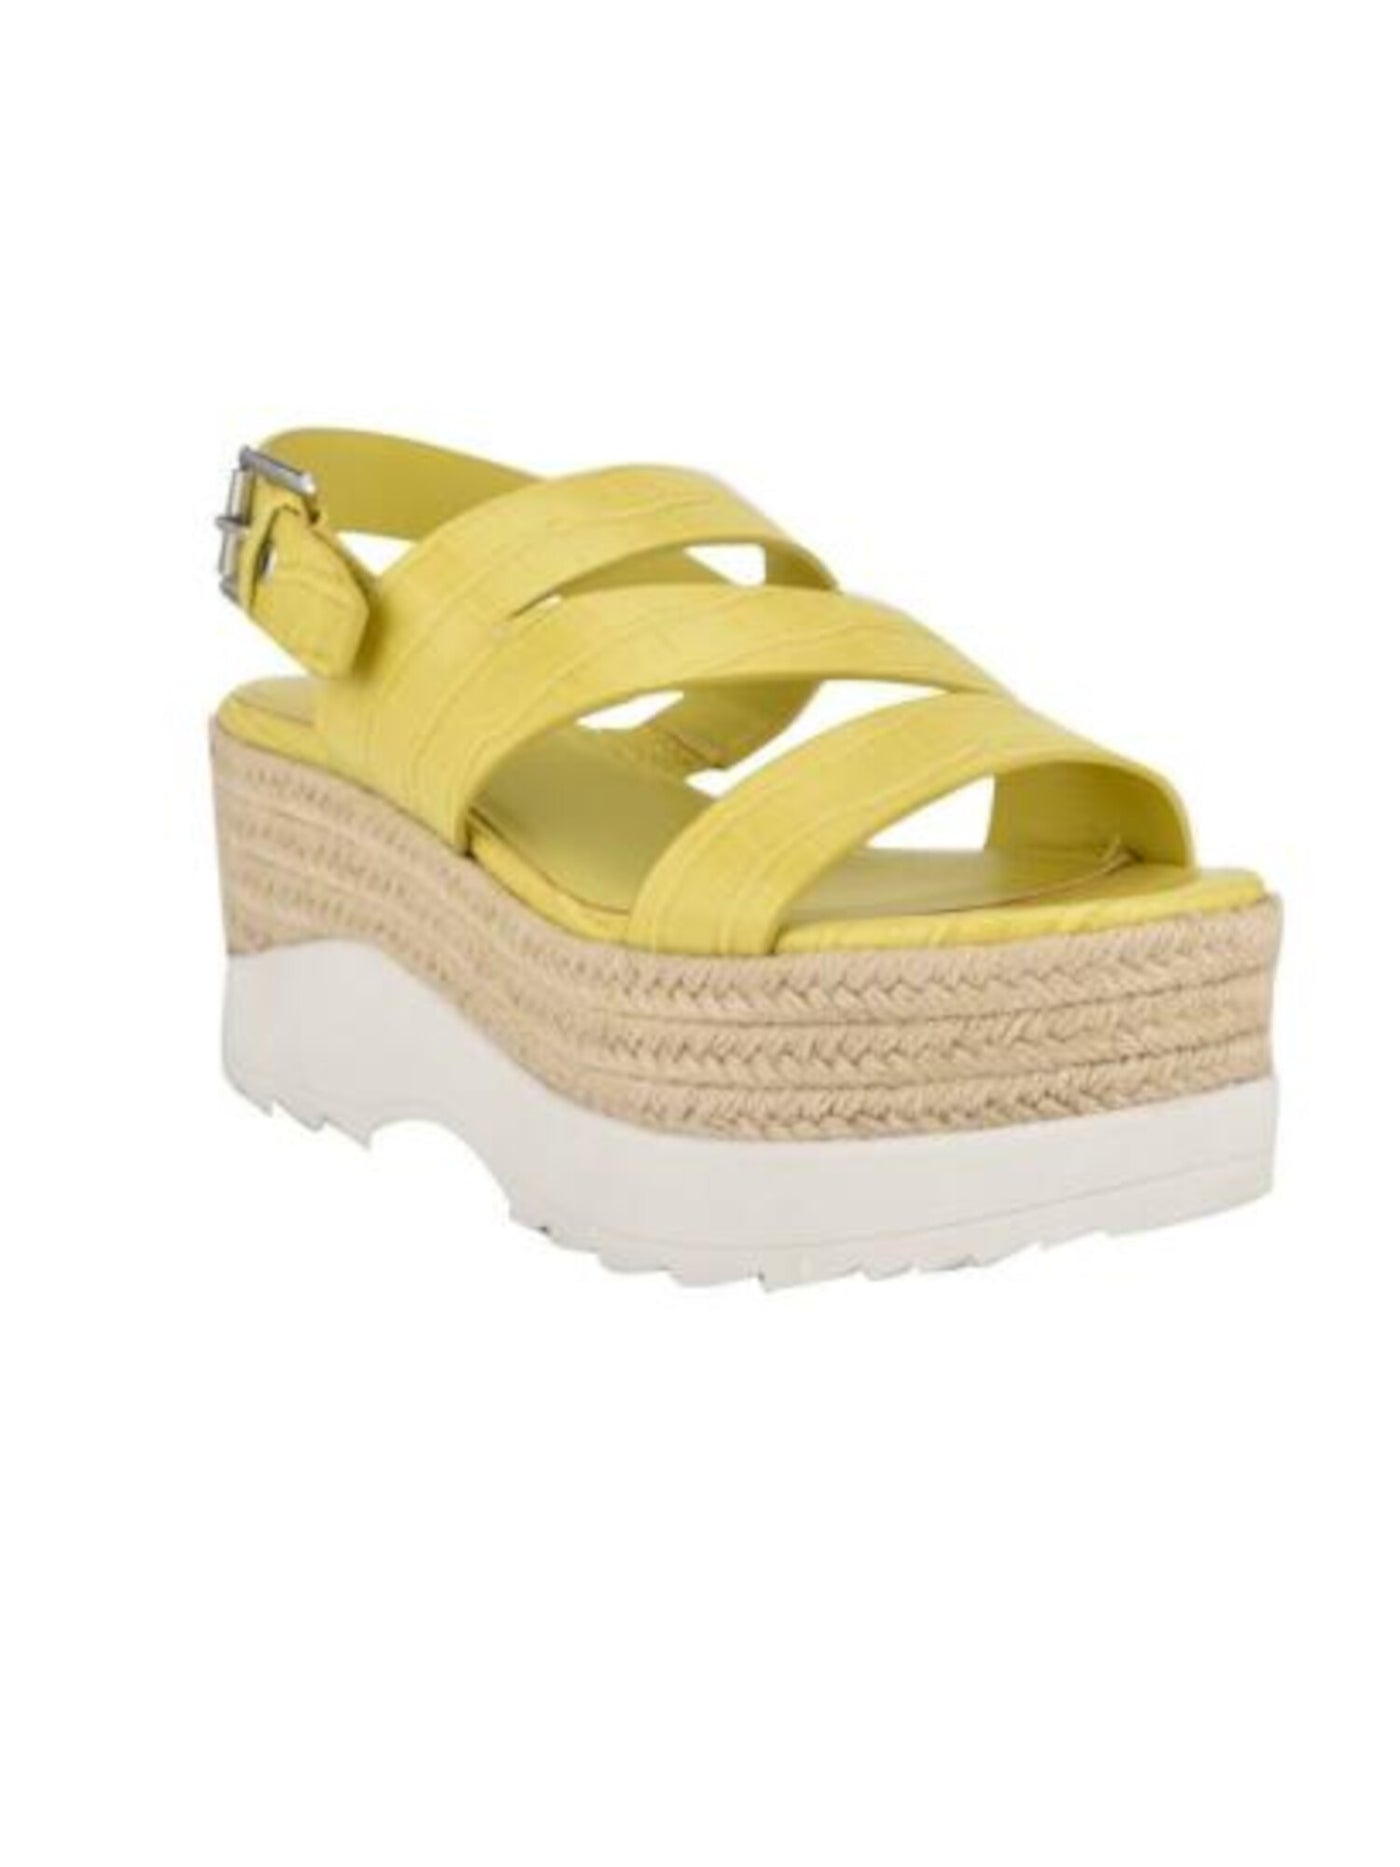 MARC FISHER Womens Yellow Mixed Media 2" Platform Adjustable Strap Zakiya Open Toe Wedge Buckle Espadrille Shoes 9 M